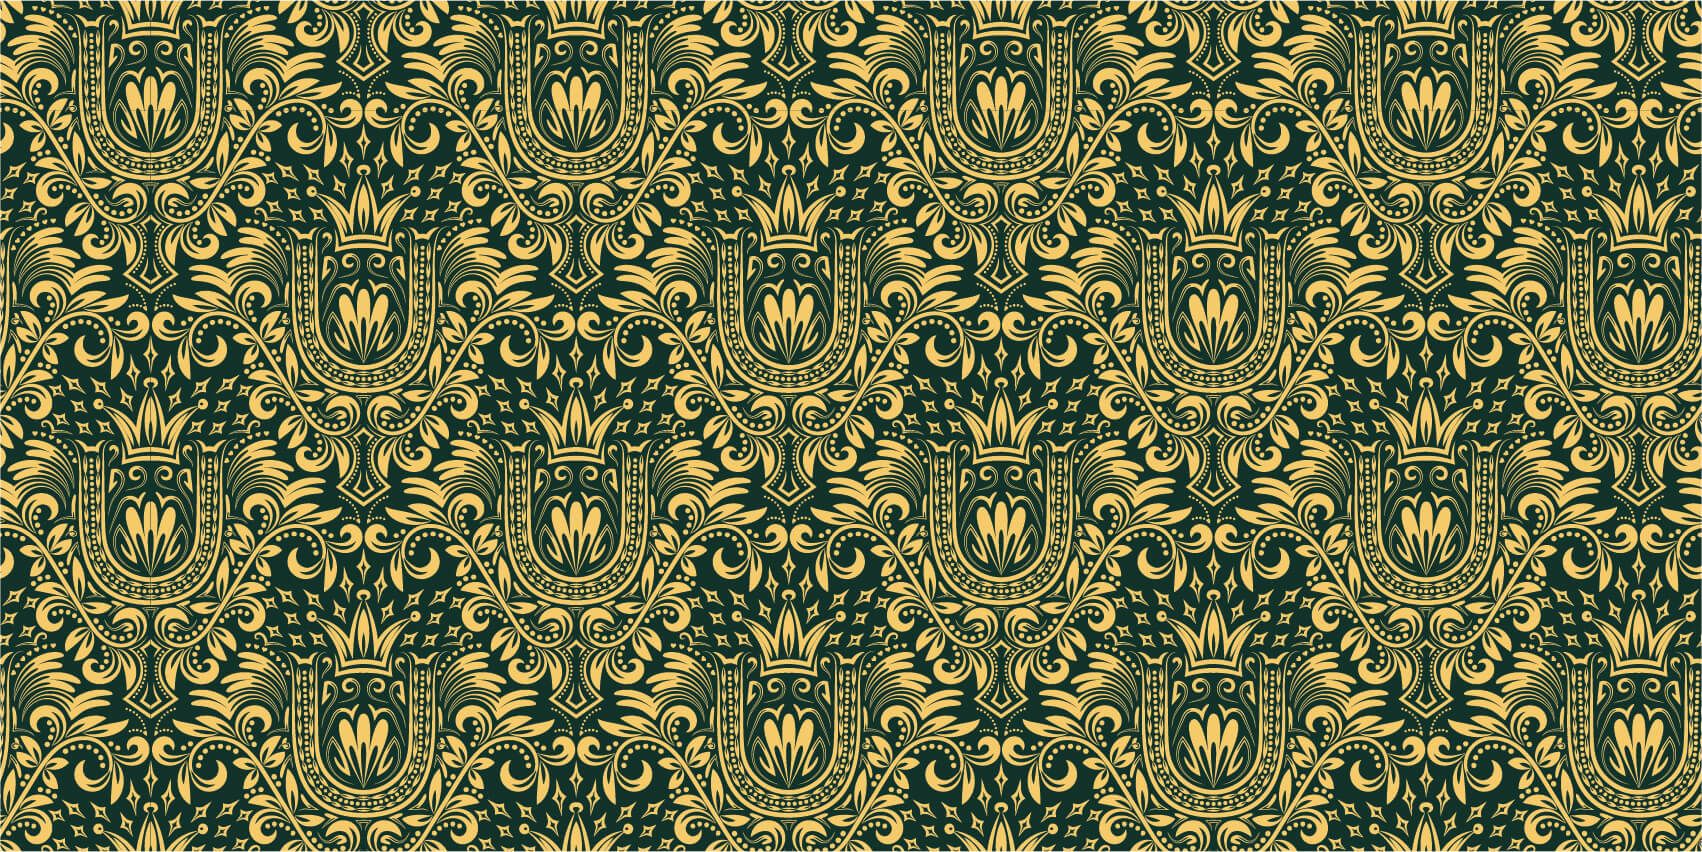 Baroque wallpaper - Green baroque pattern - Bedroom